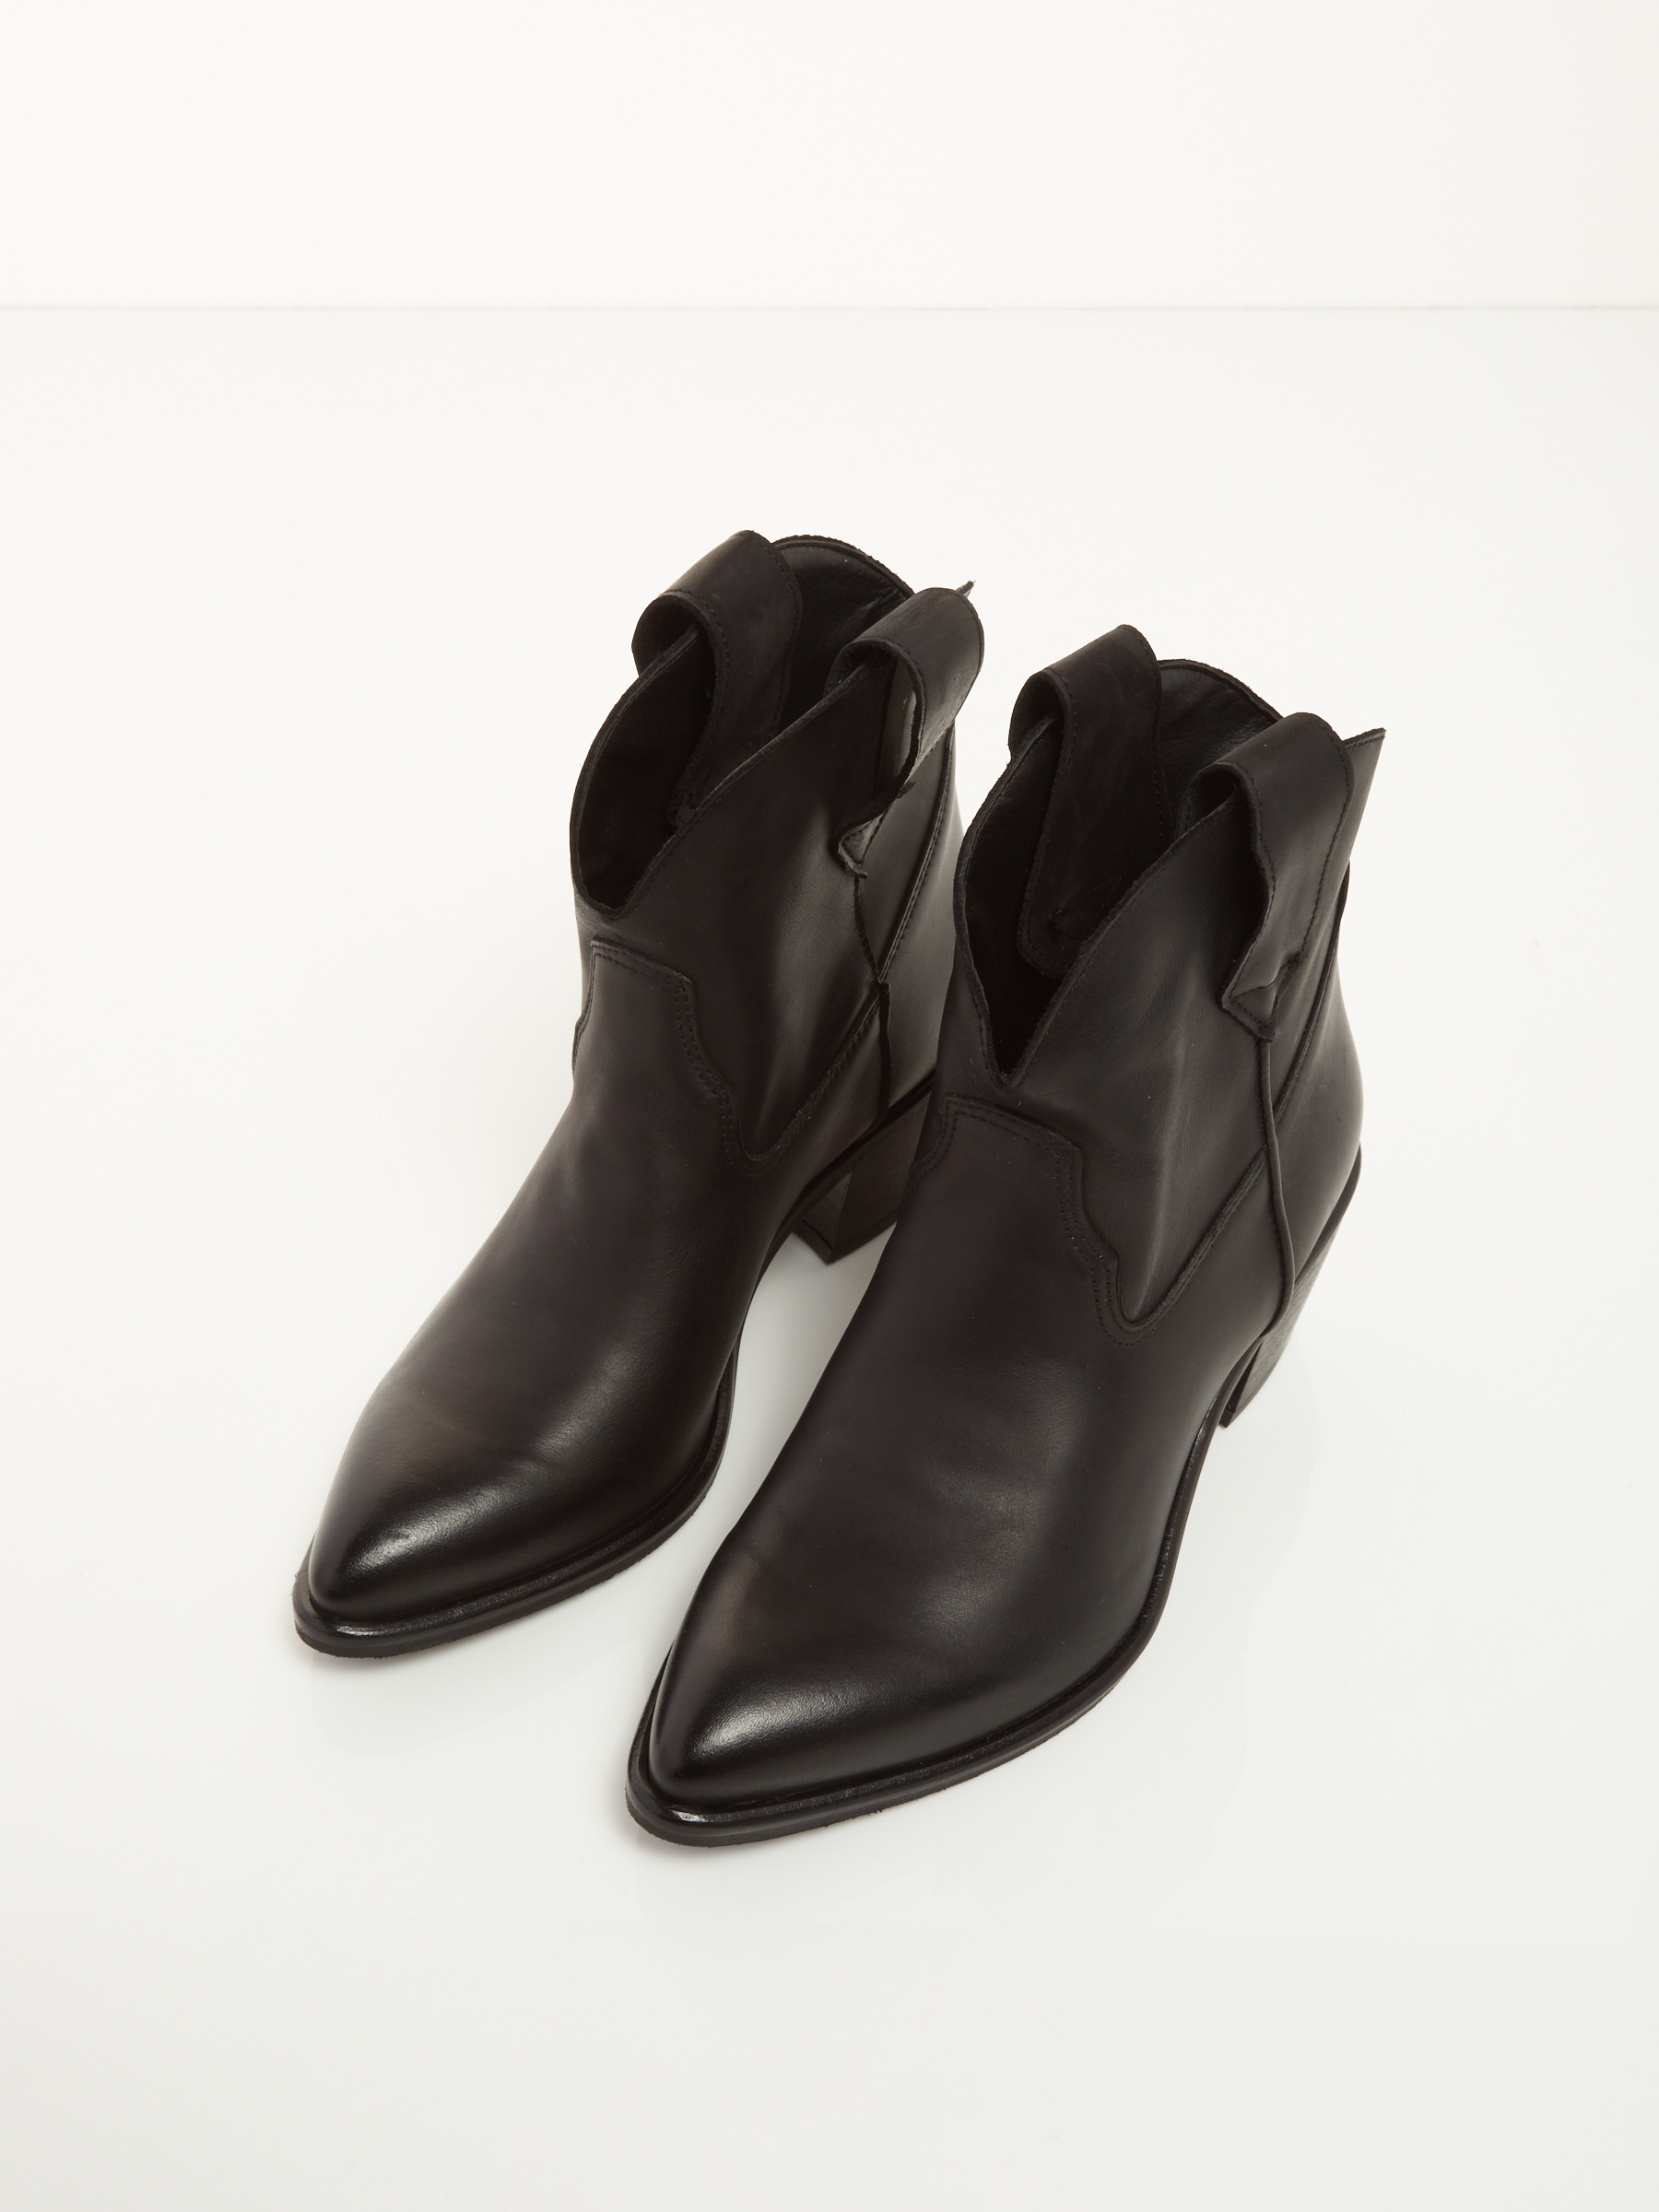 Shop Leather Cowboy Ankle Boots F0545554-0502